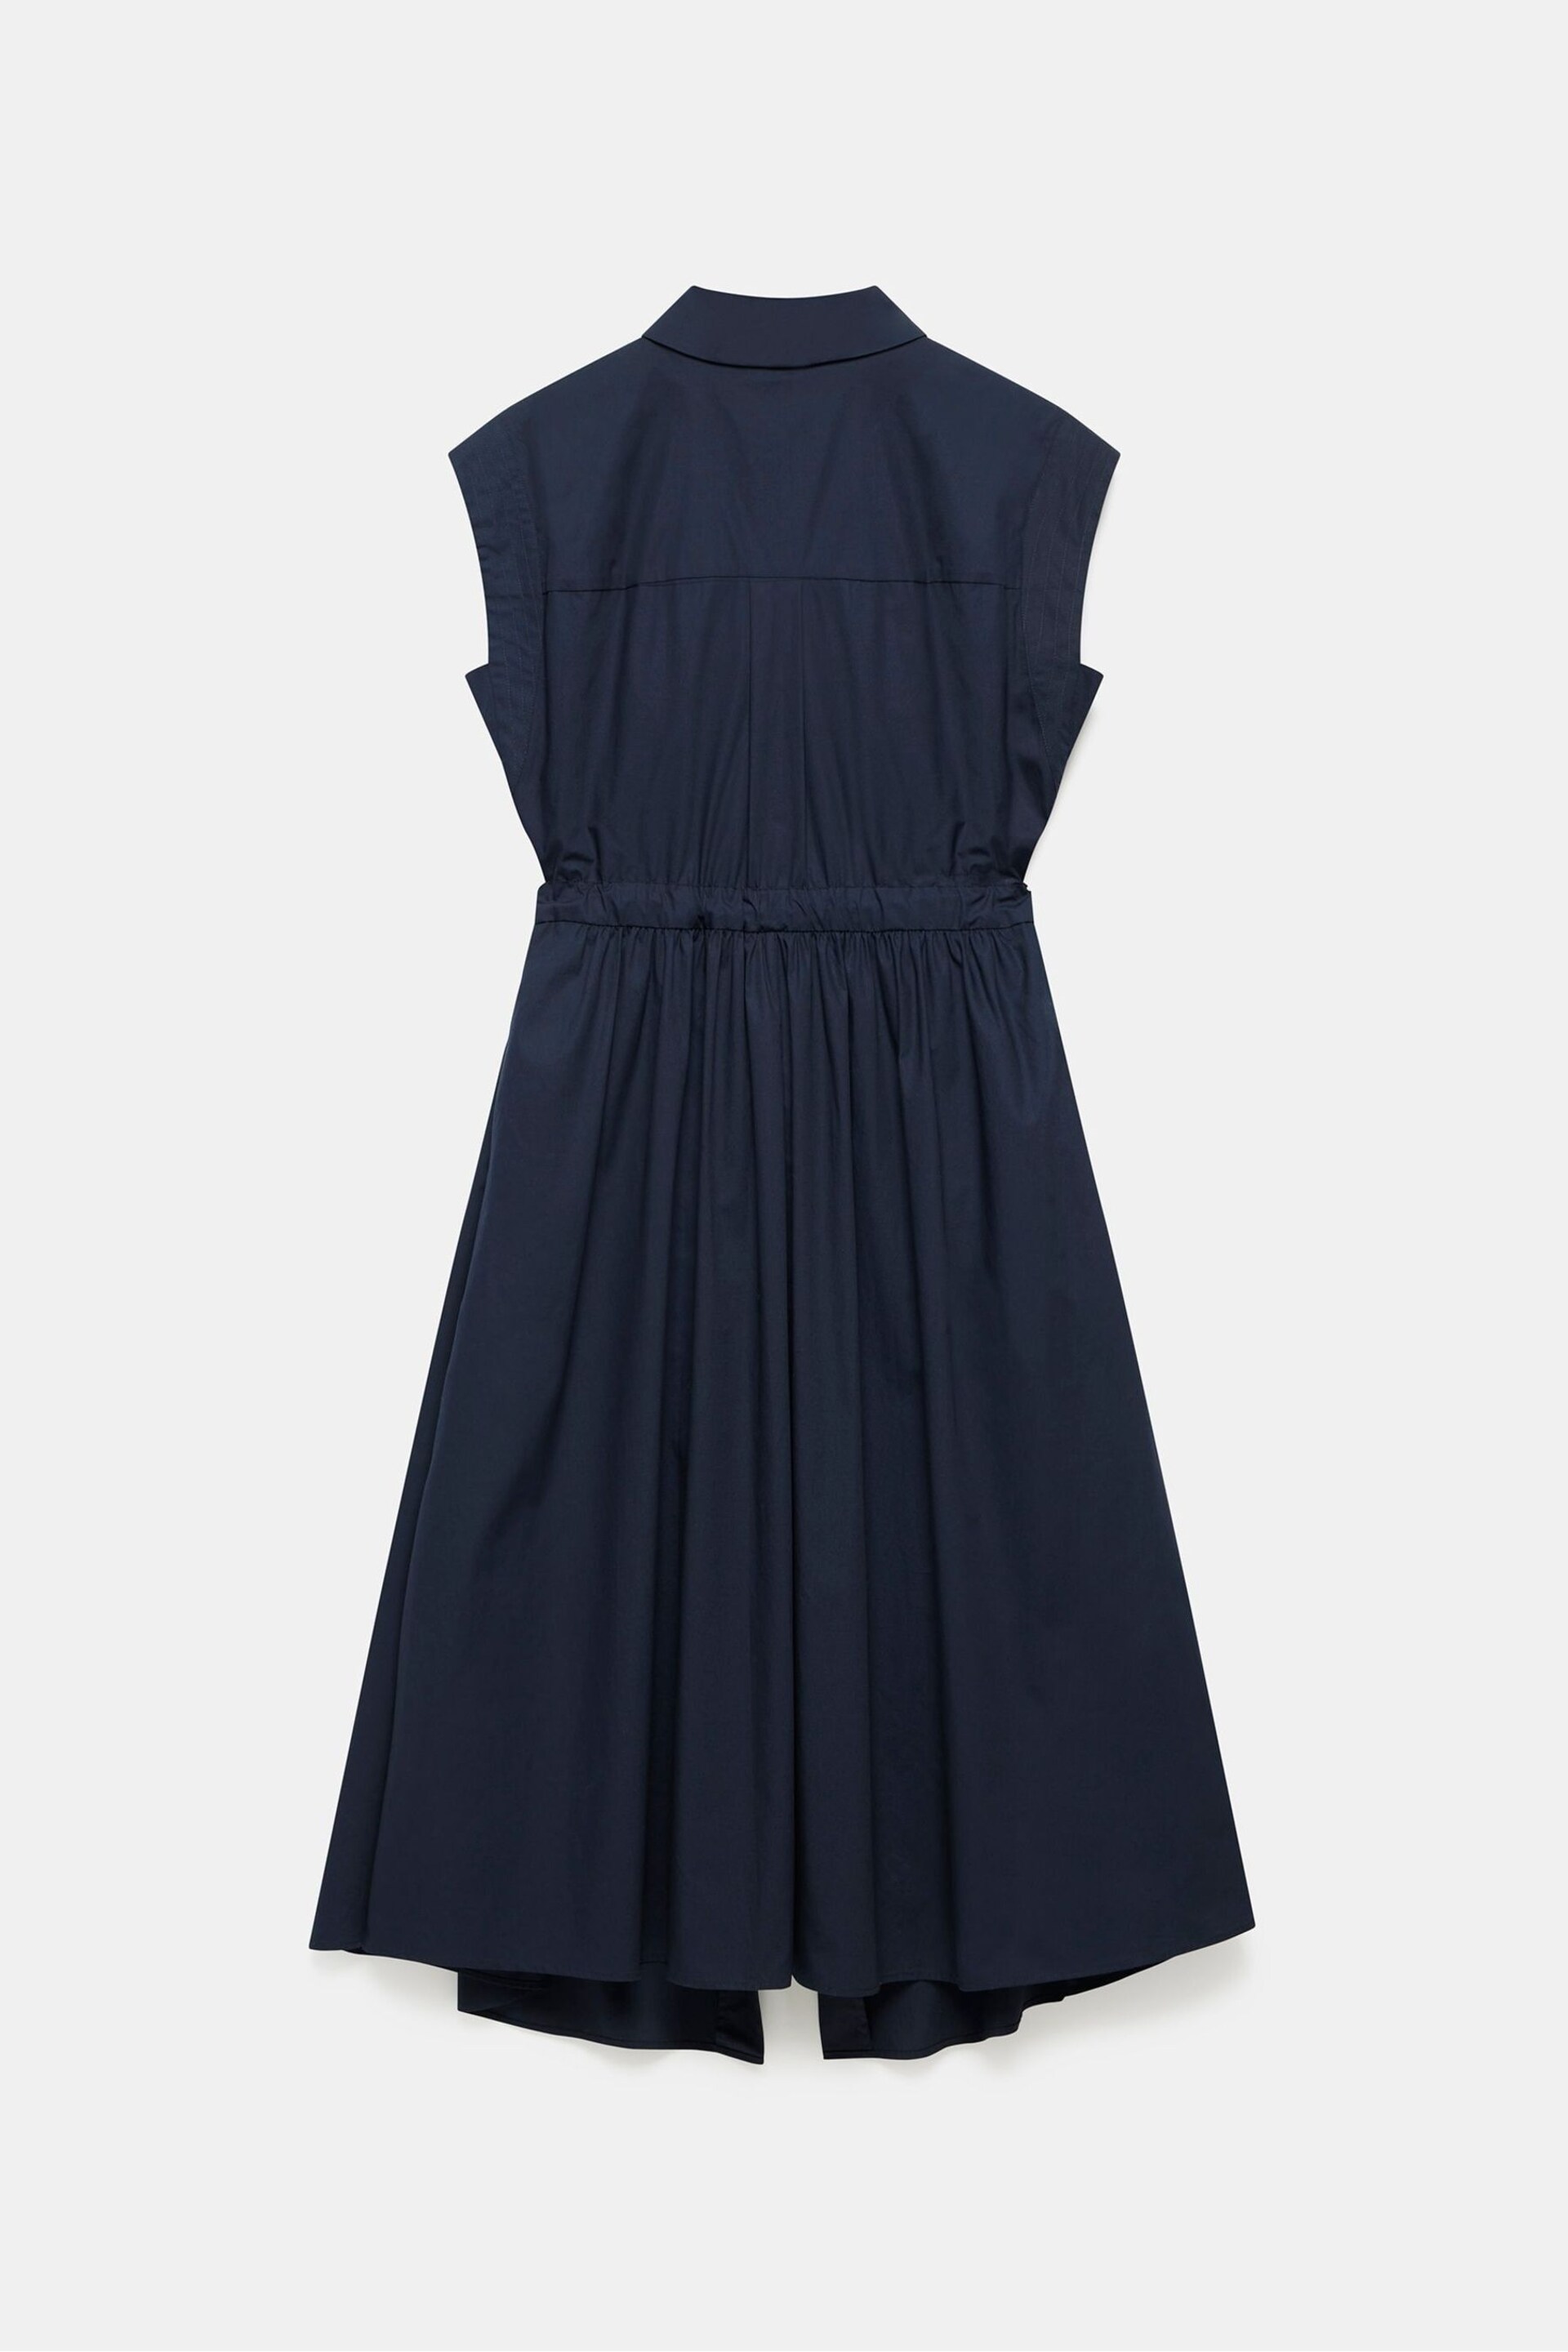 Mint Velvet Blue Cotton Wrap Midi Shirt Dress - Image 4 of 4